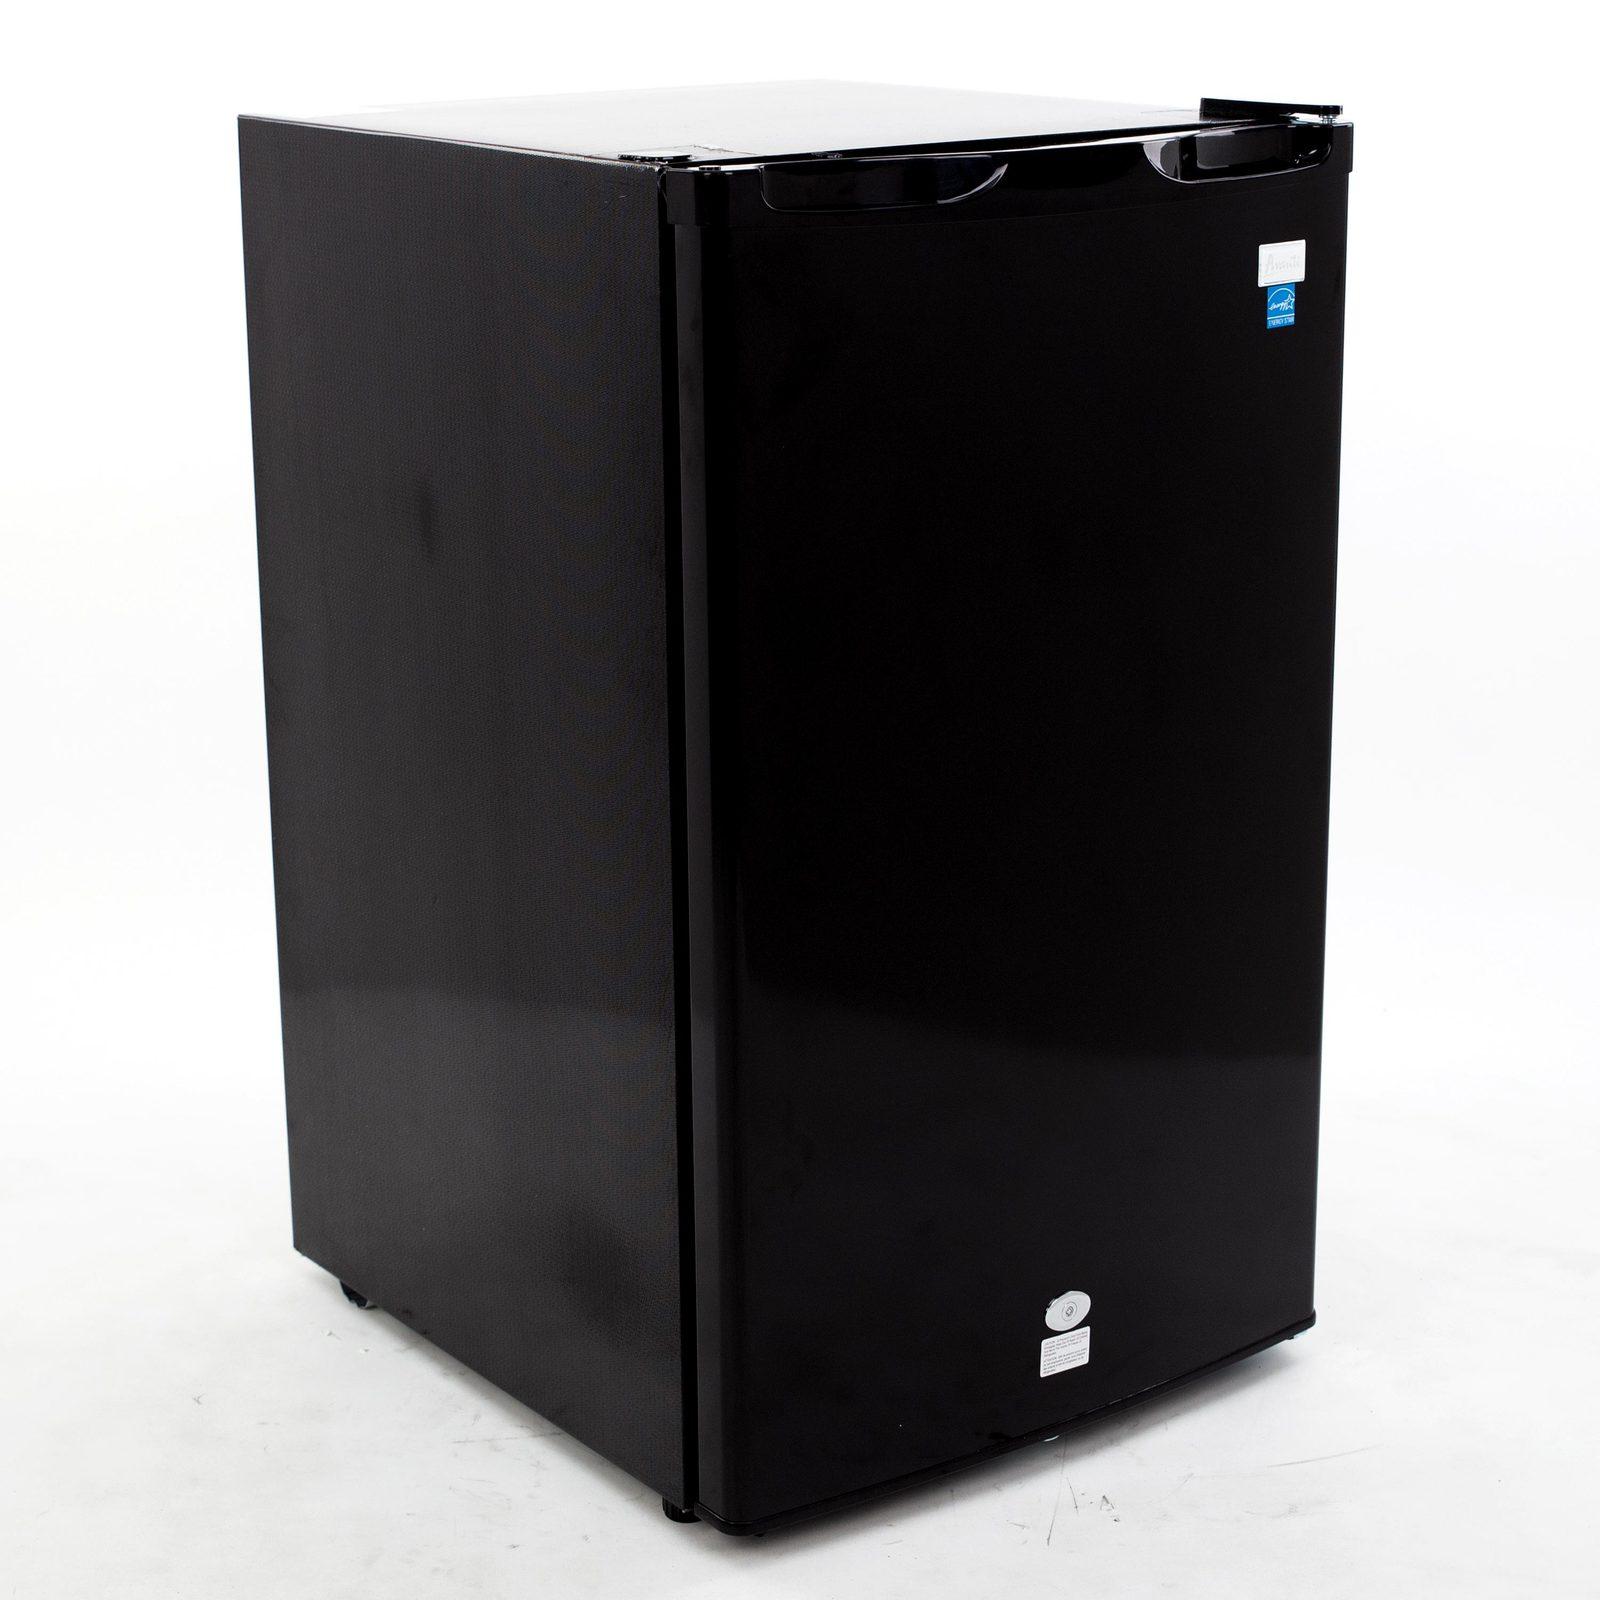 AVANTI AR4456SS 4.4 cu. ft. Compact Refrigerator